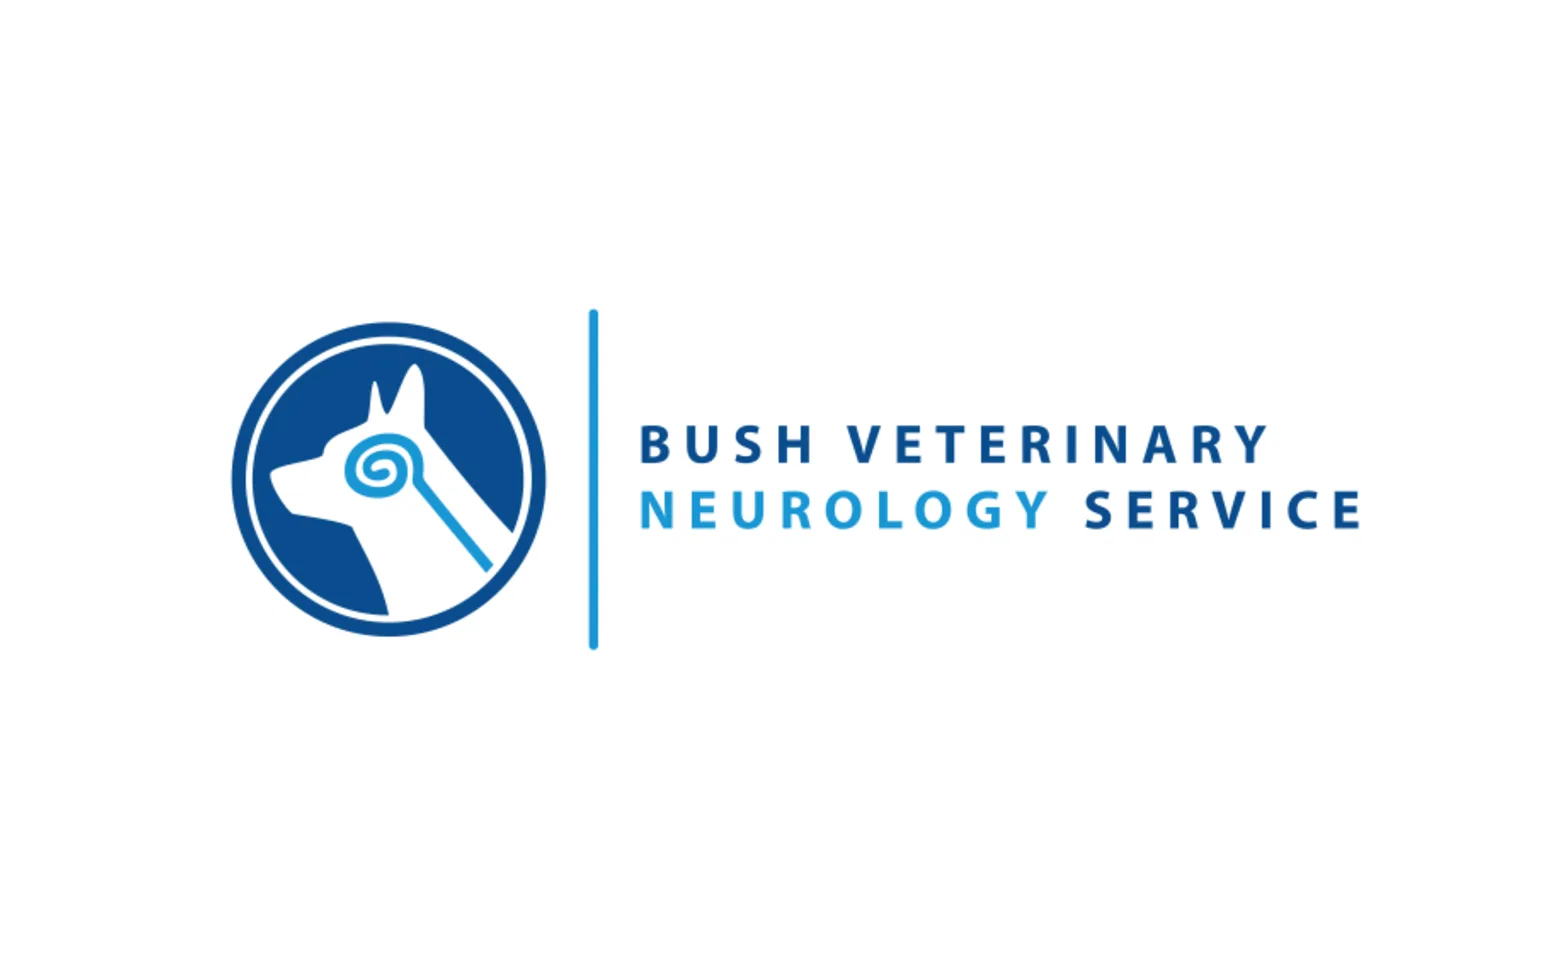 Bush Veterinary Neurology Service logo